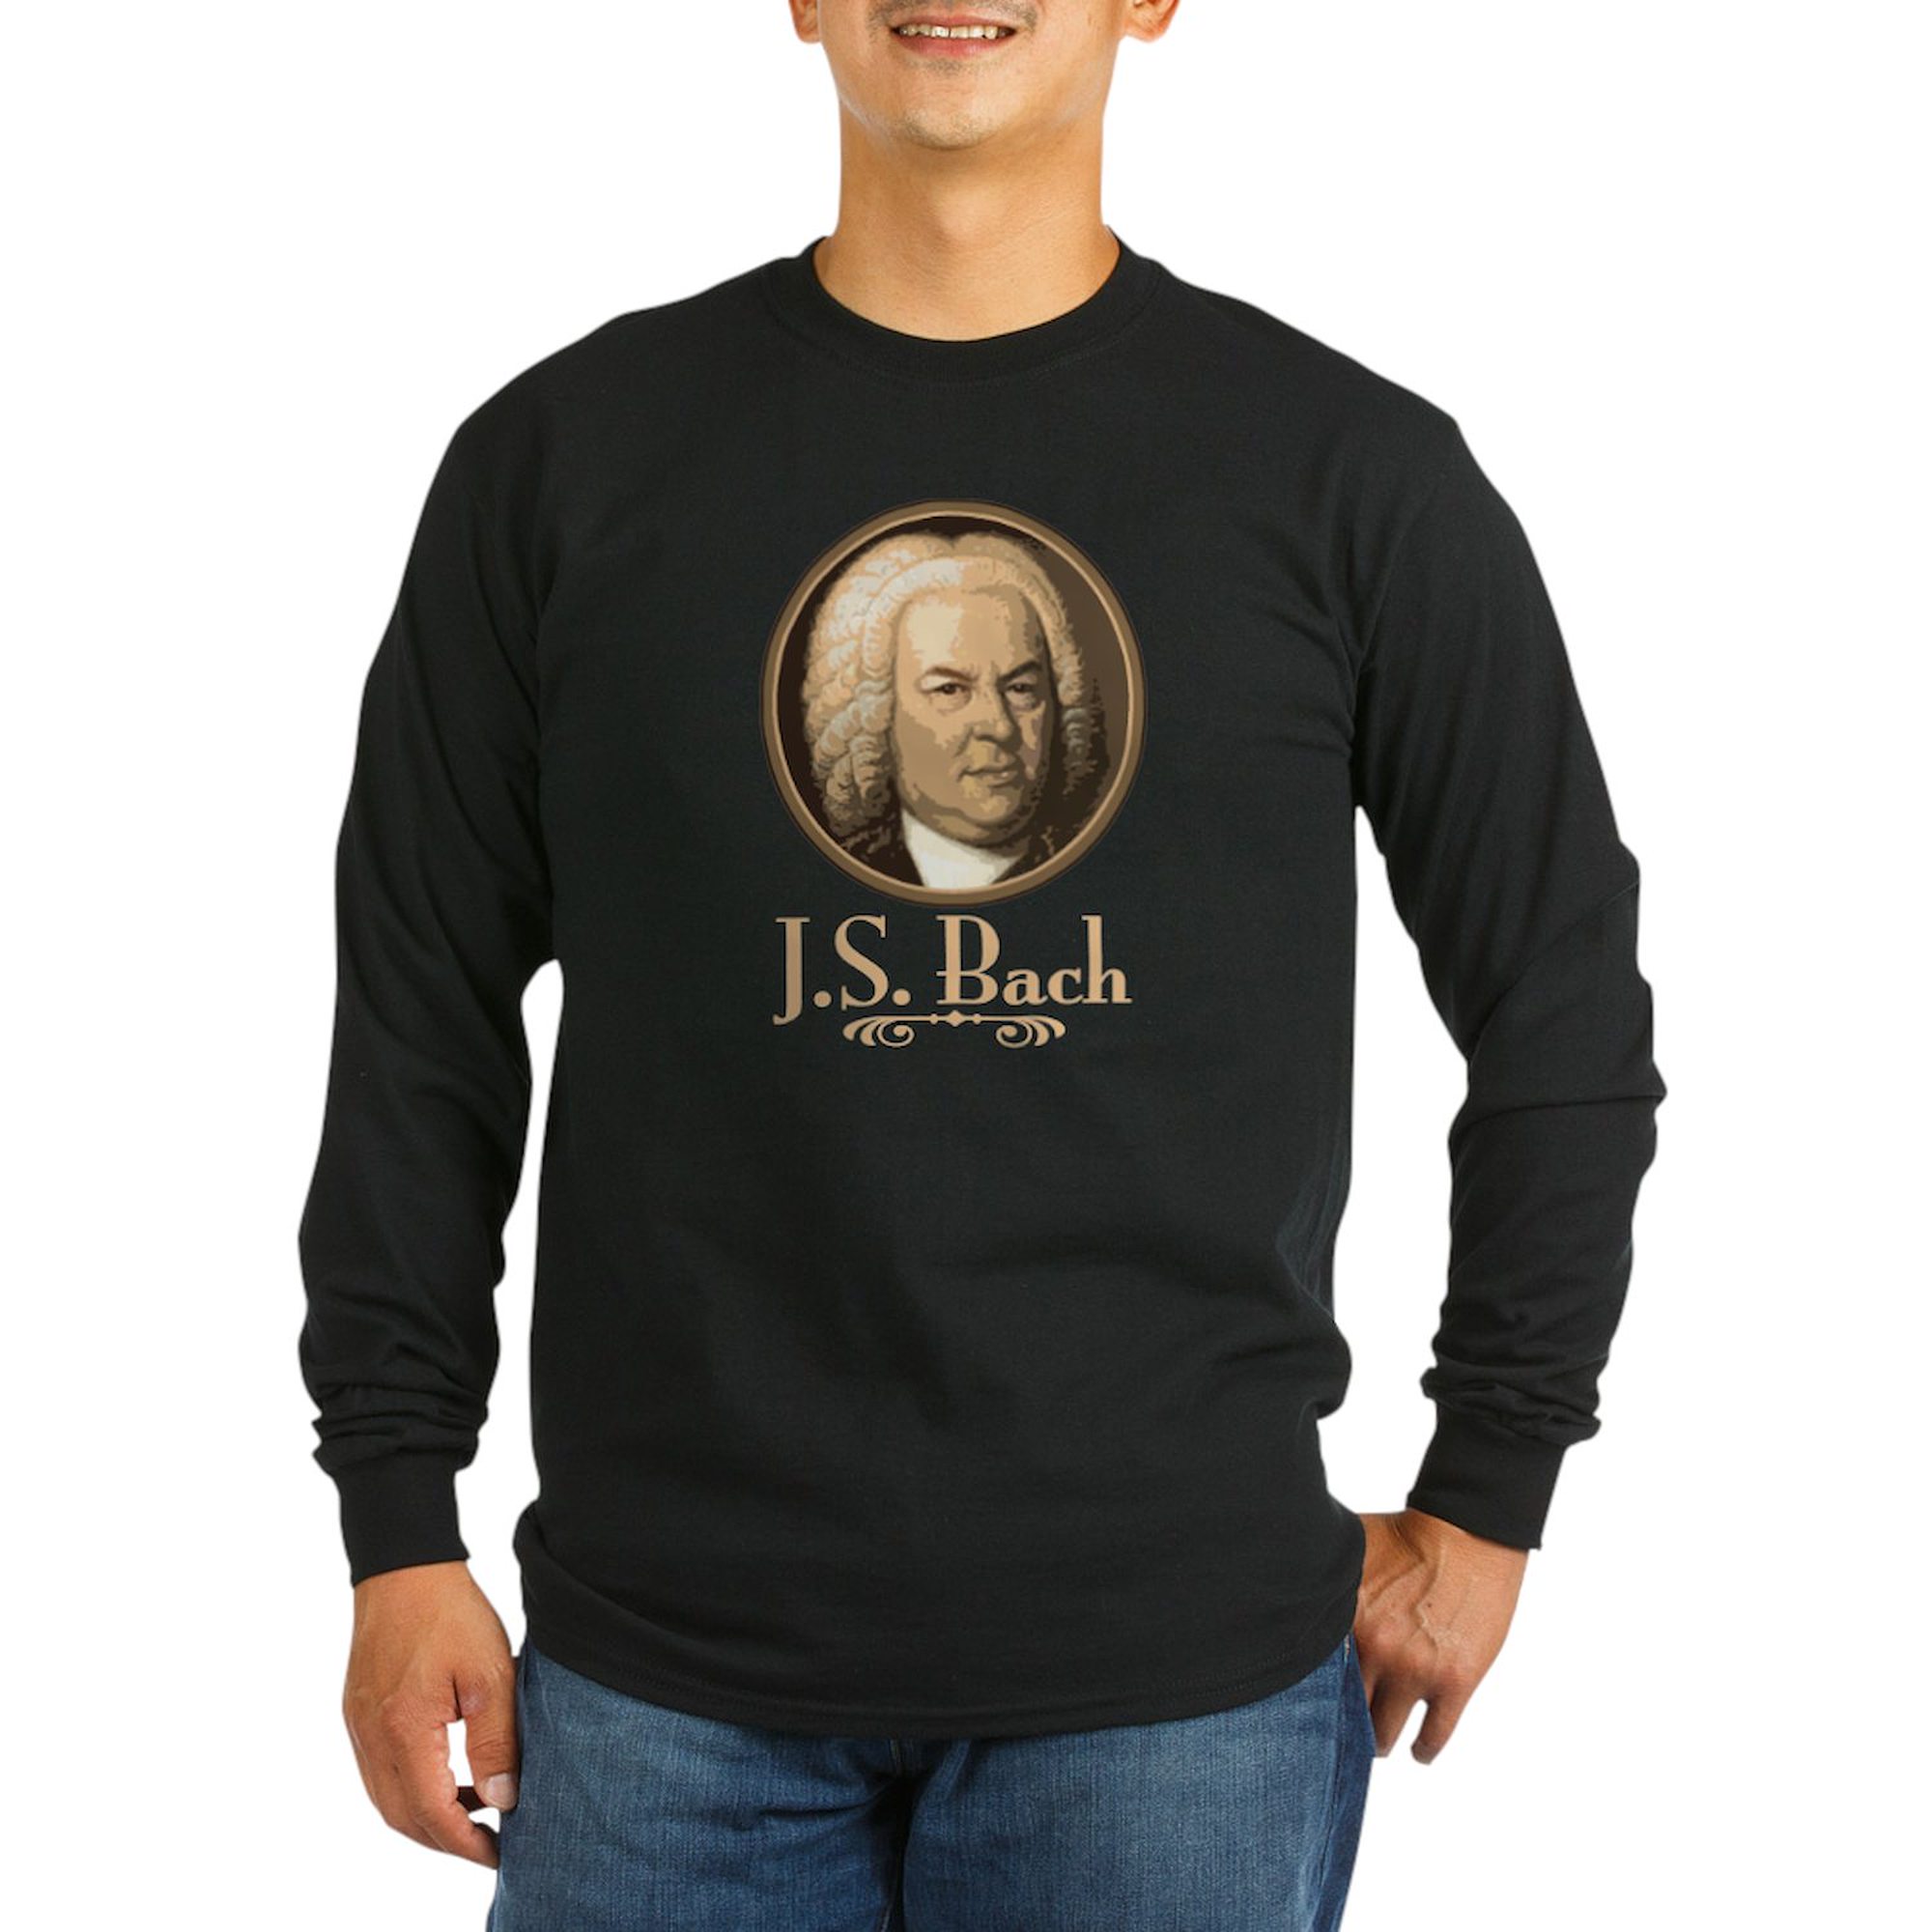 CafePress - J.S. Bach Long Sleeve Dark T Shirt - Long Sleeve Dark T-Shirt - image 1 of 4